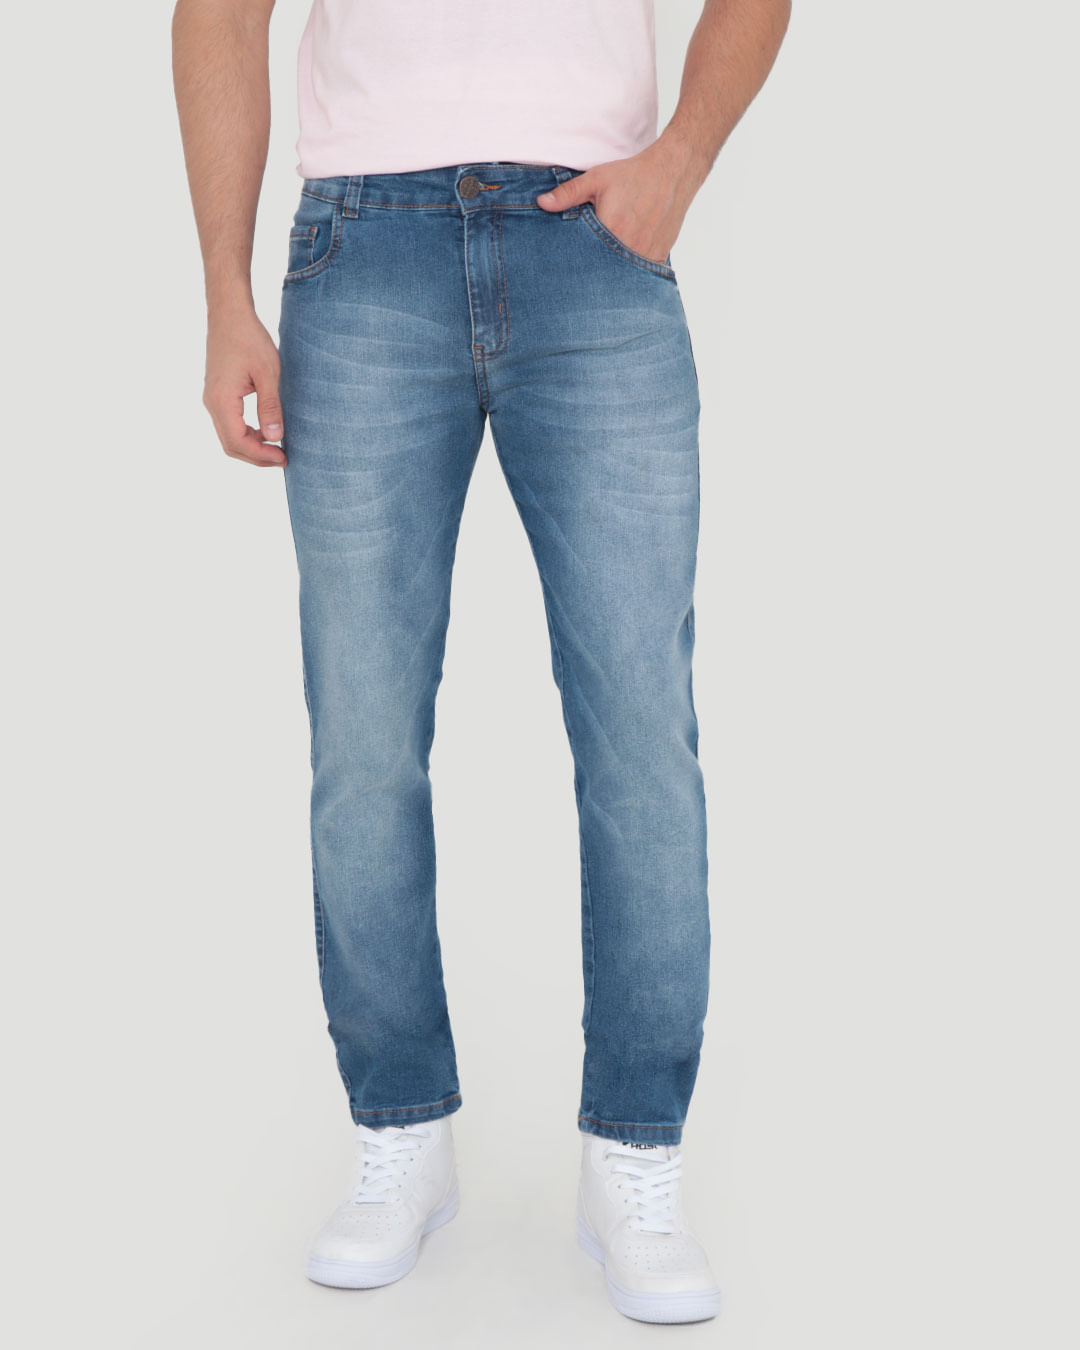 23121000988045-blue-jeans-medio-1